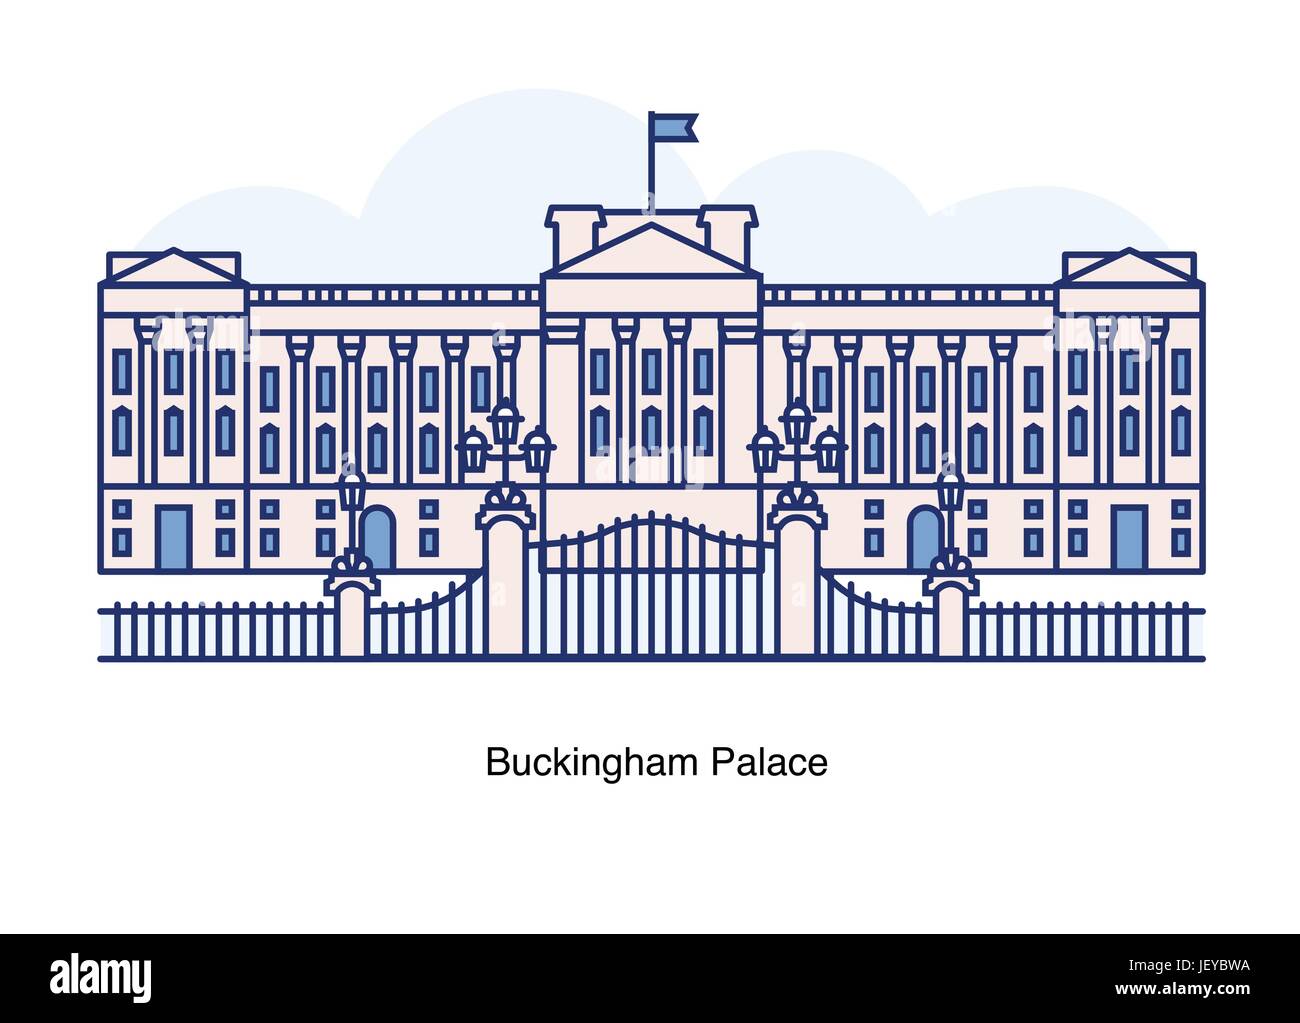 Vektorgrafik-Linie des Buckingham Palace, London, England. Stock Vektor